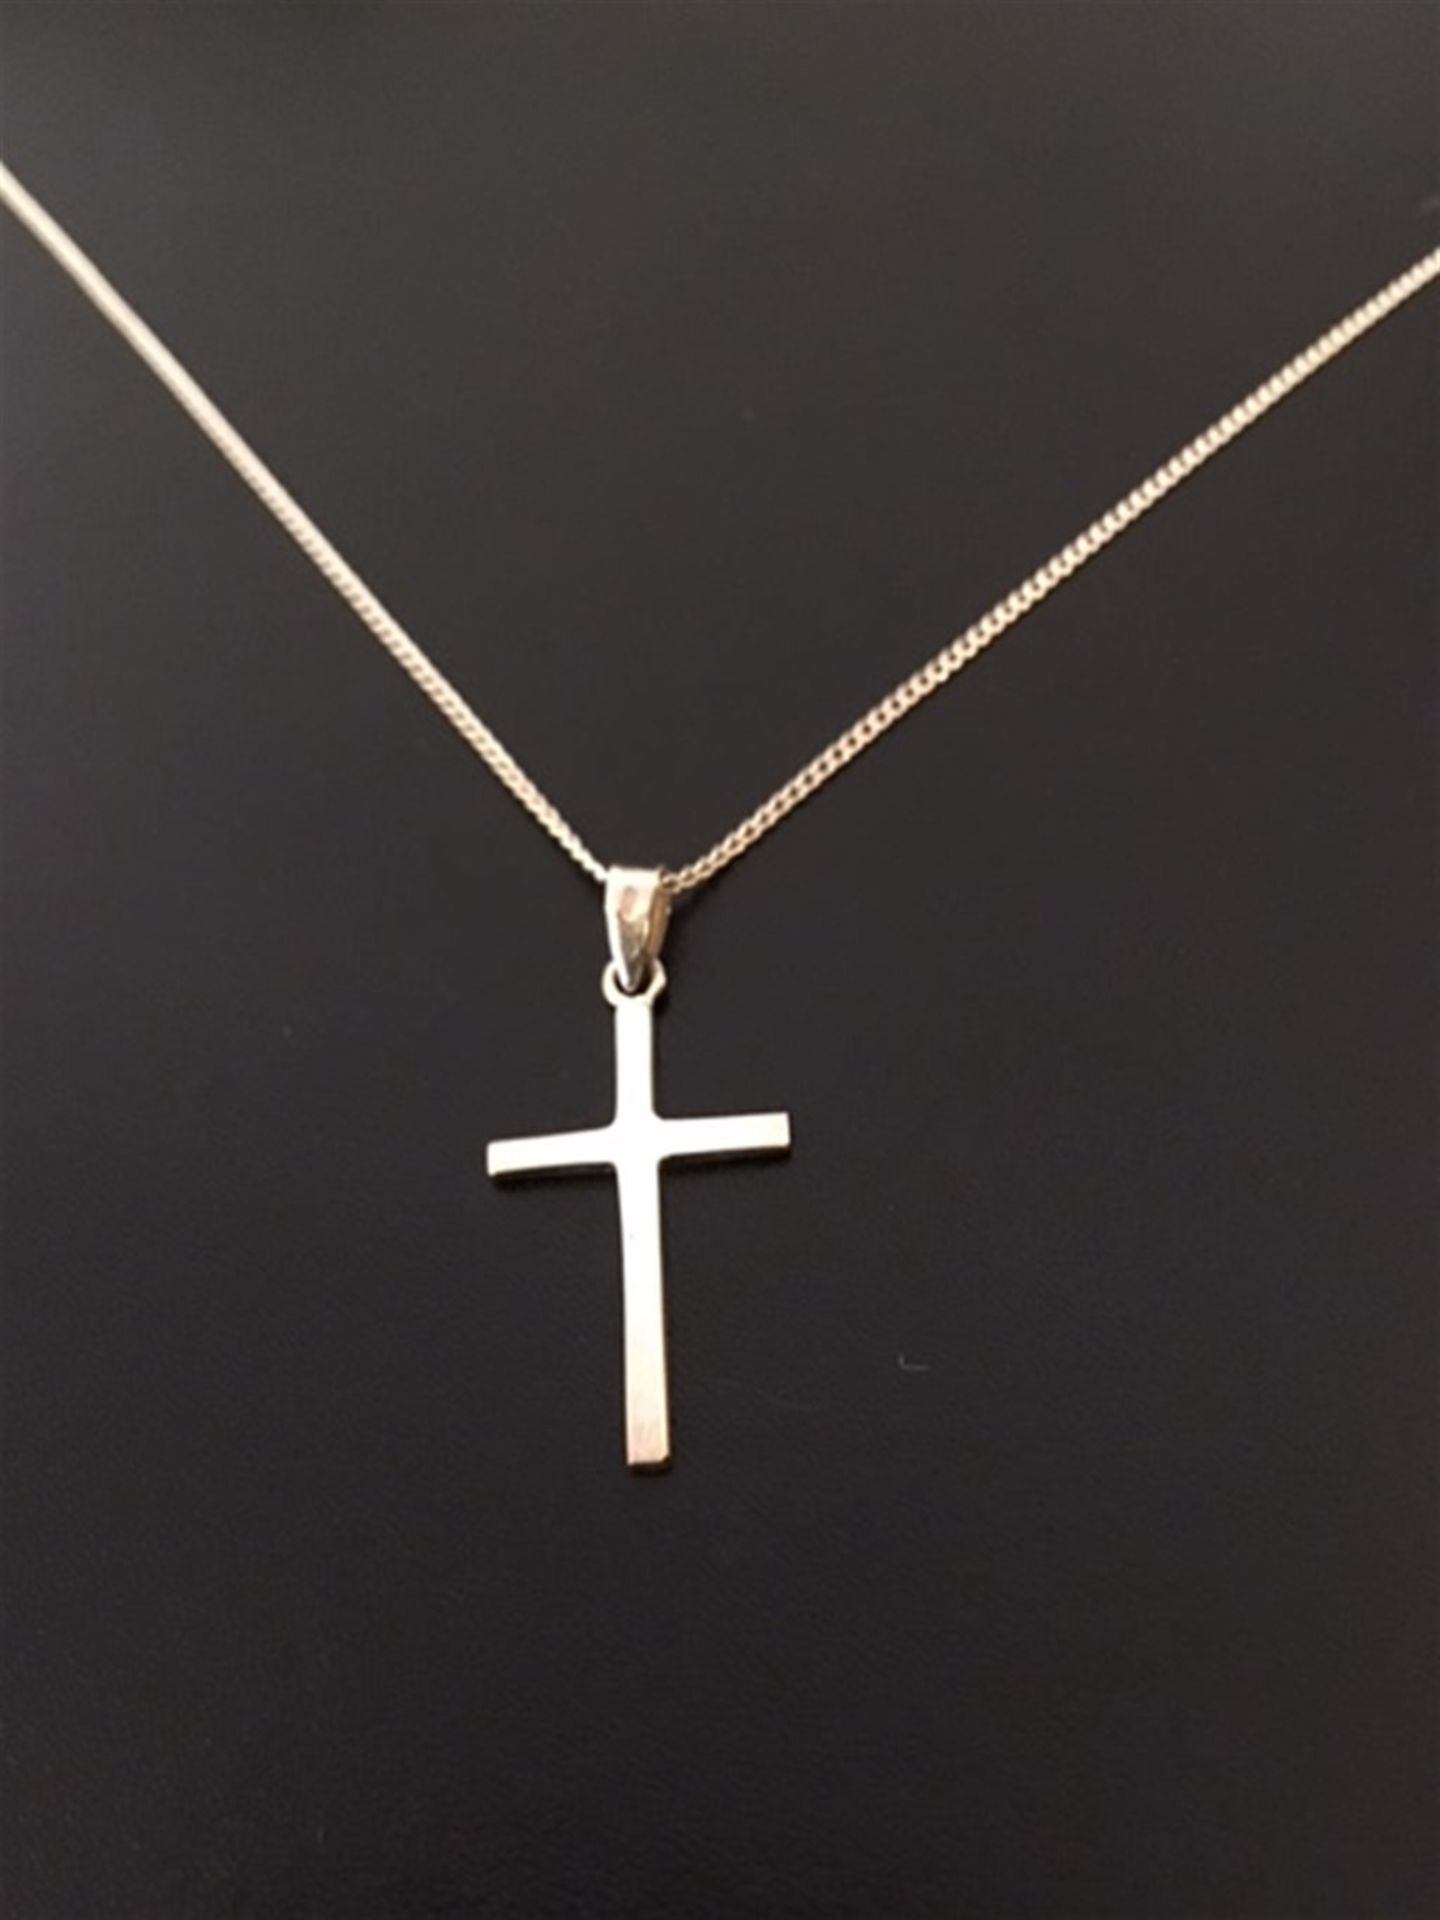 Silver cross & chain